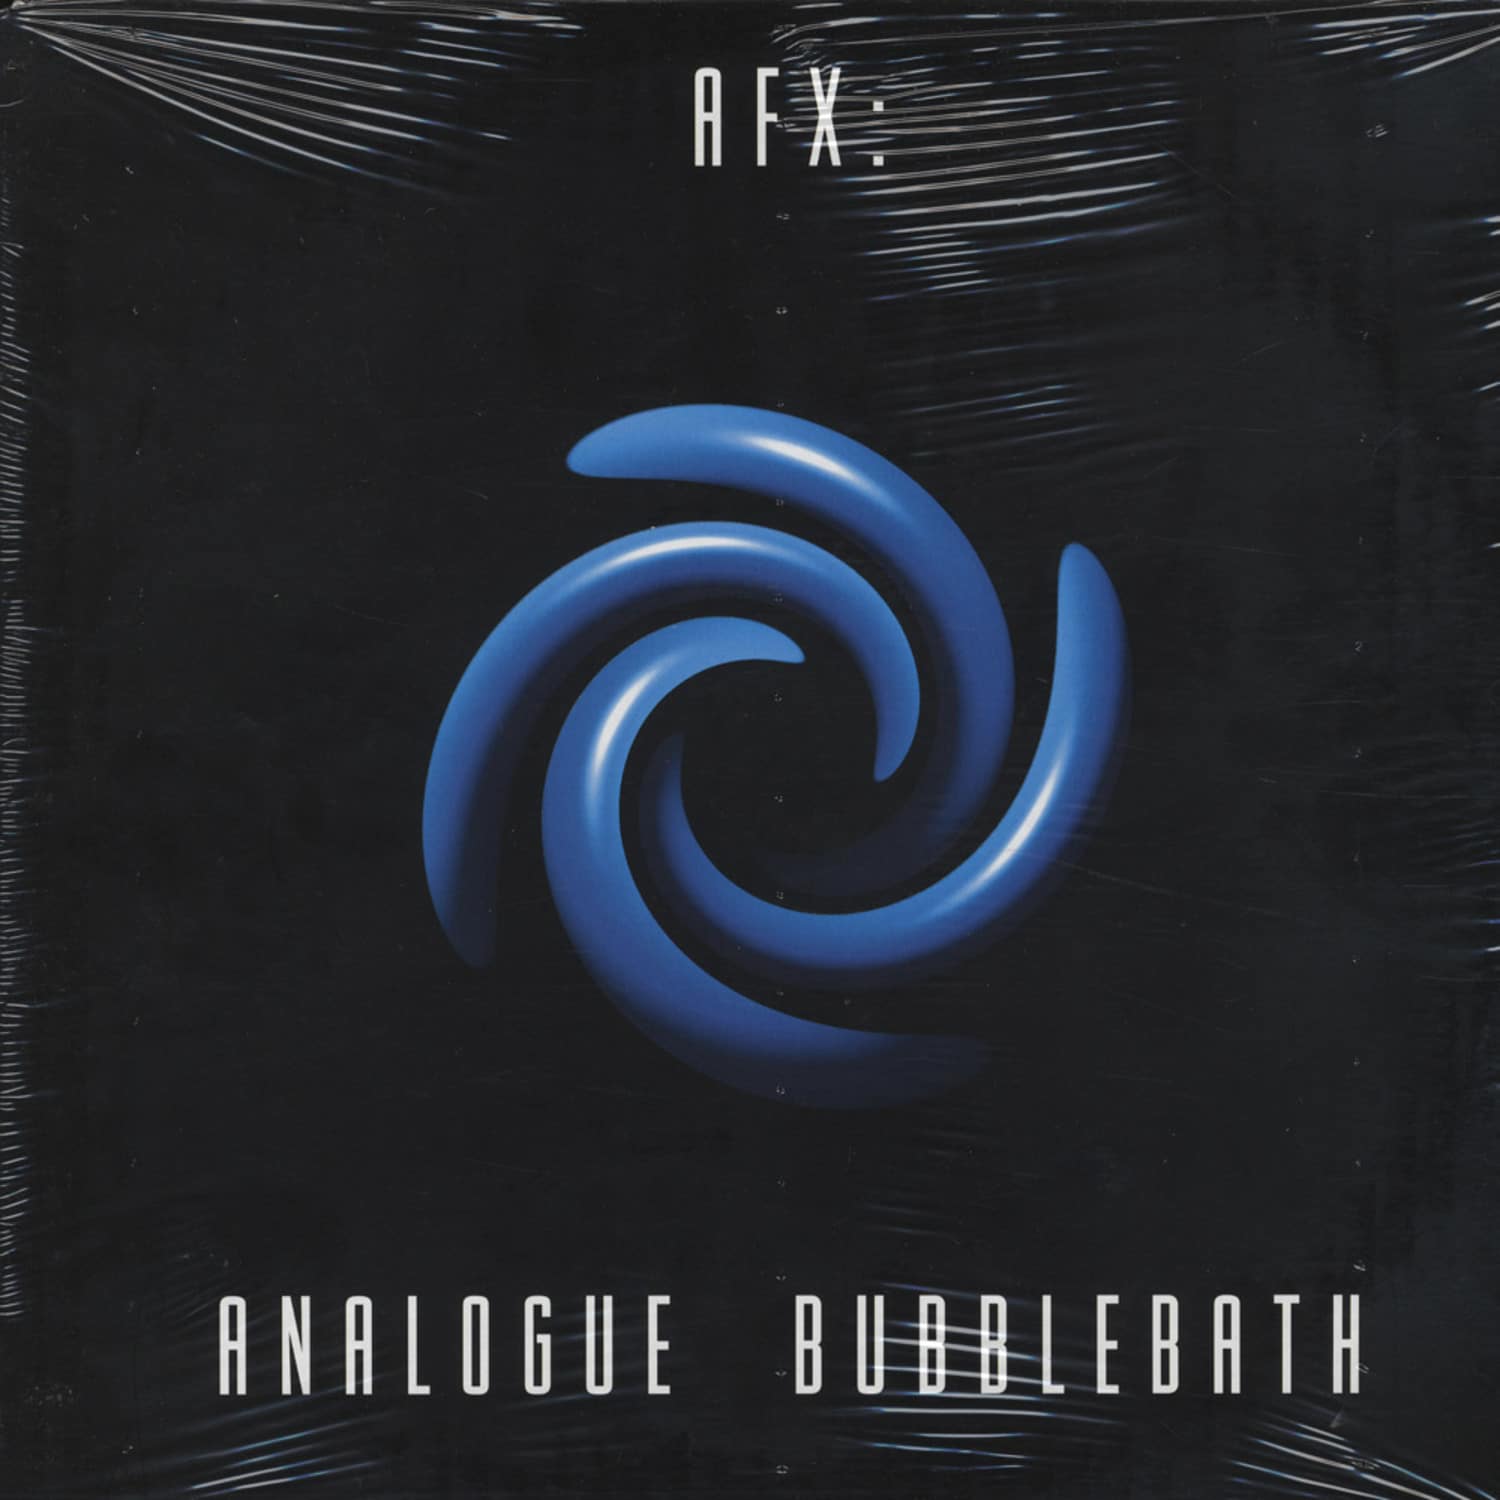 AFX  - Analogue Bubblebath